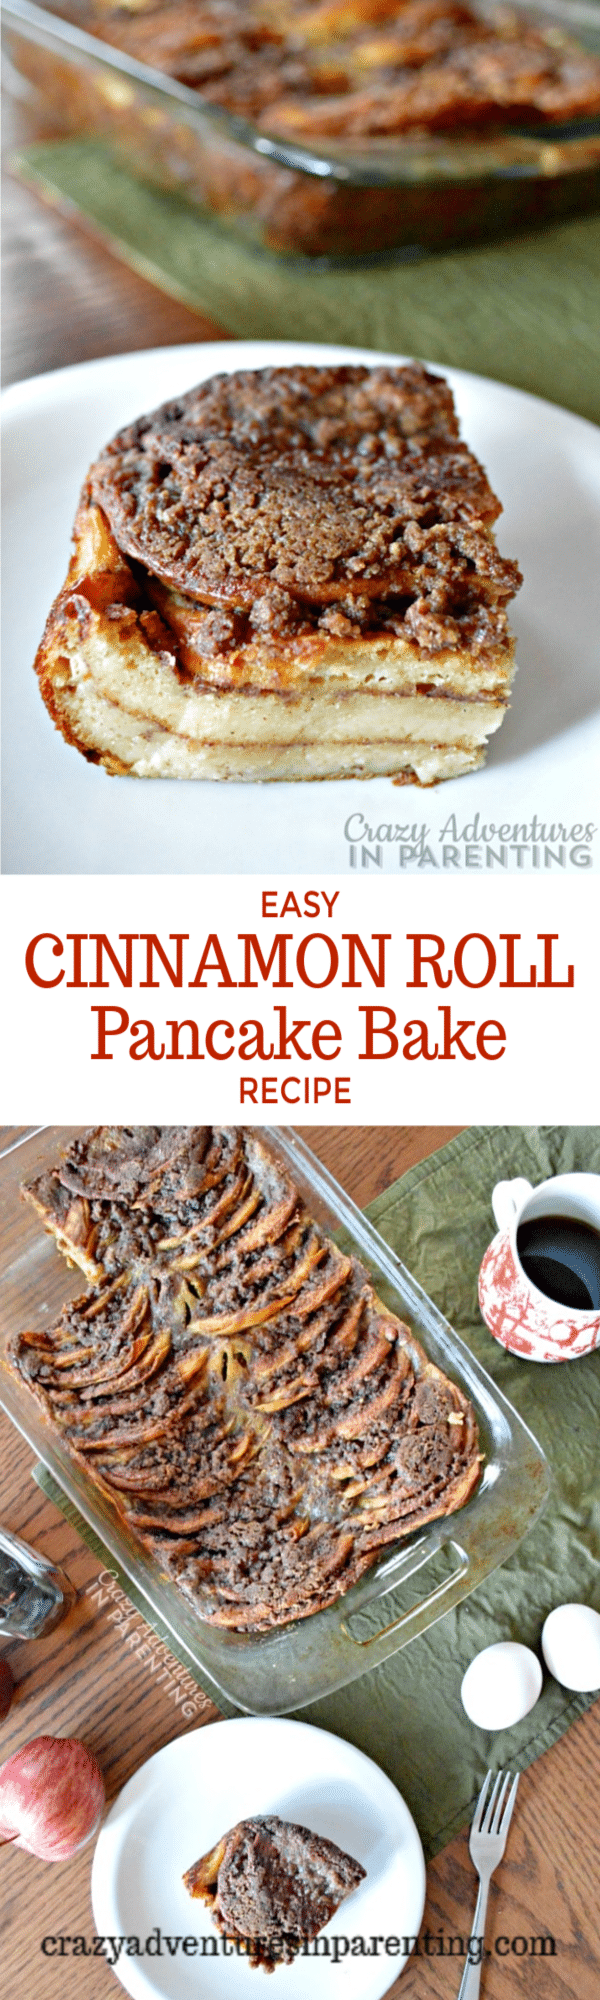 Easy Cinnamon Roll Pancake Bake Recipe